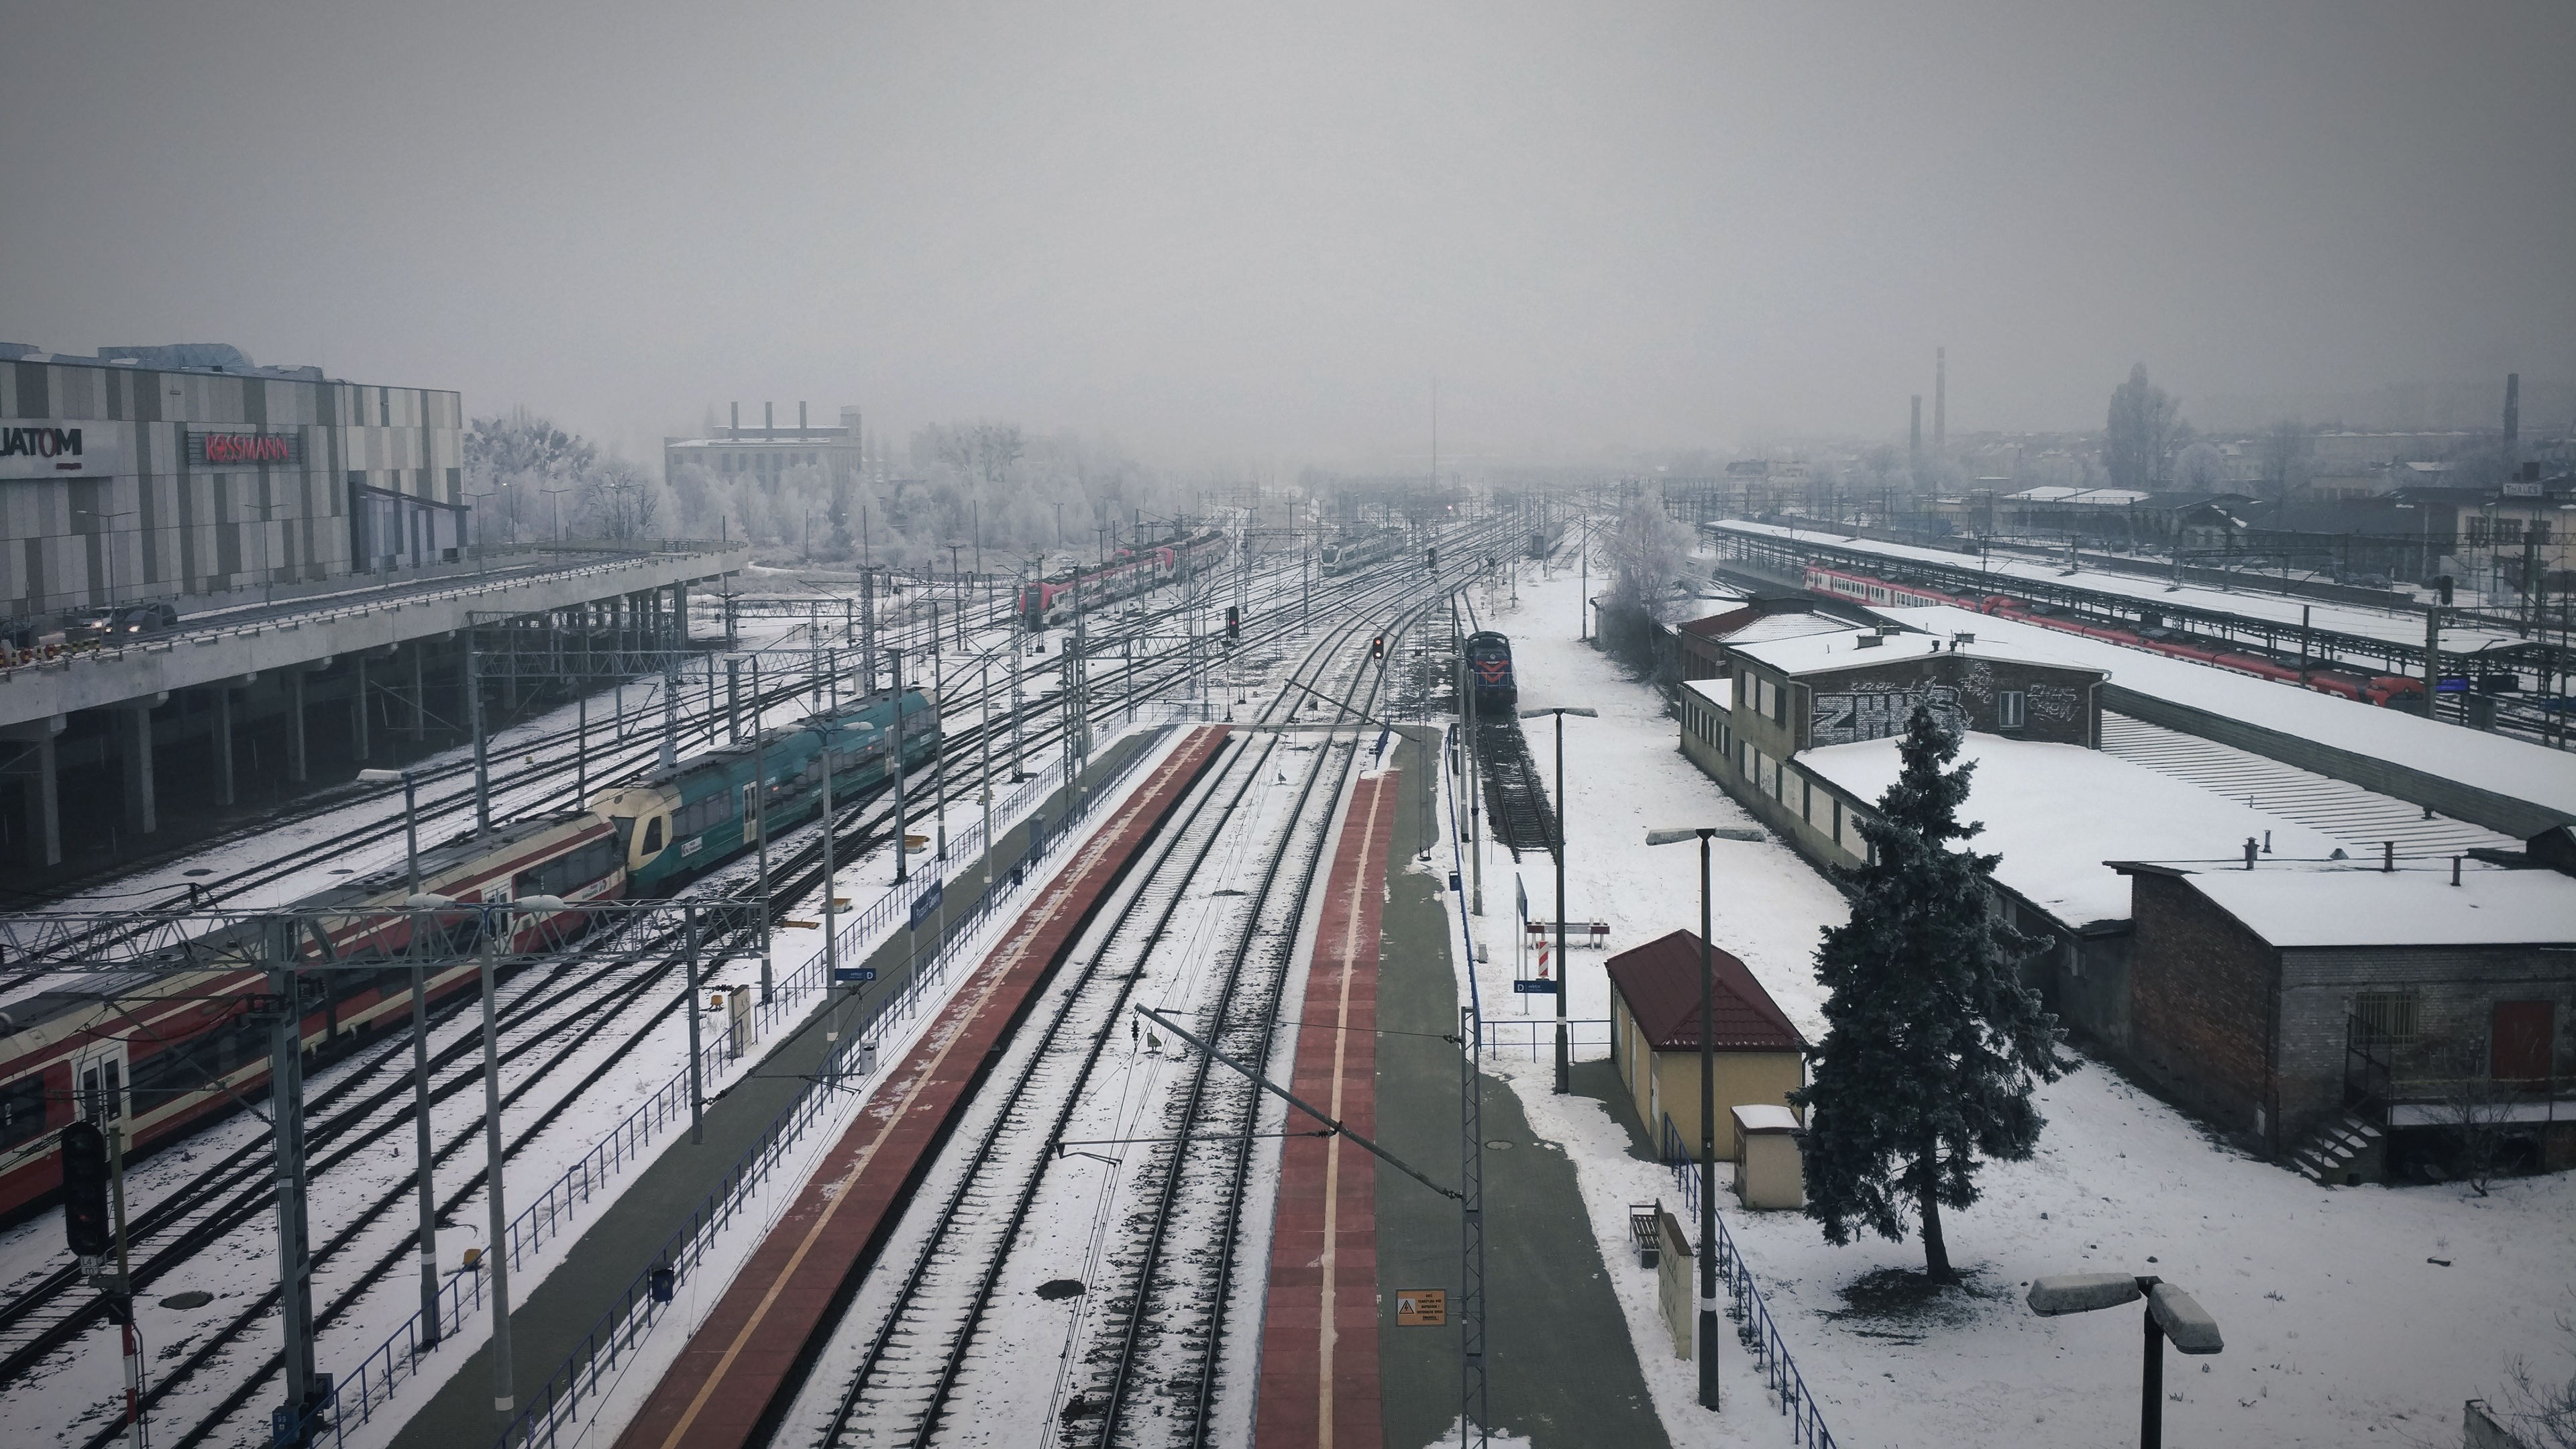 General 3840x2160 Poland train train station railway winter snow mist Poznan sky urban cold